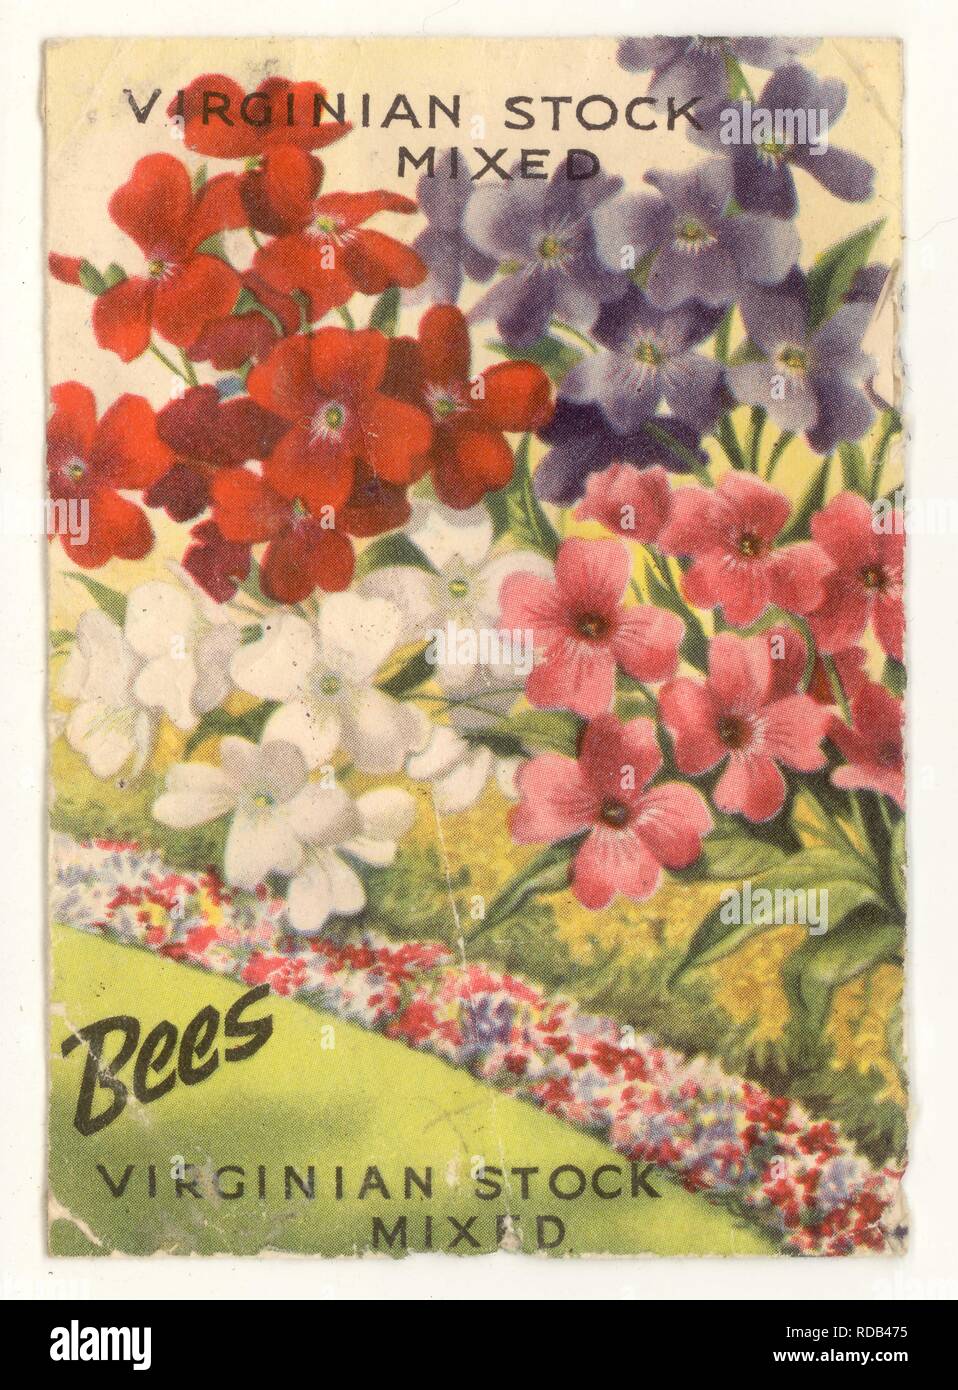 Vintage Bee's Seeds packet, Virginian Stock Mixed Flowers, Liverpool, U.K. , 1930's /1940's / 1950's Stock Photo